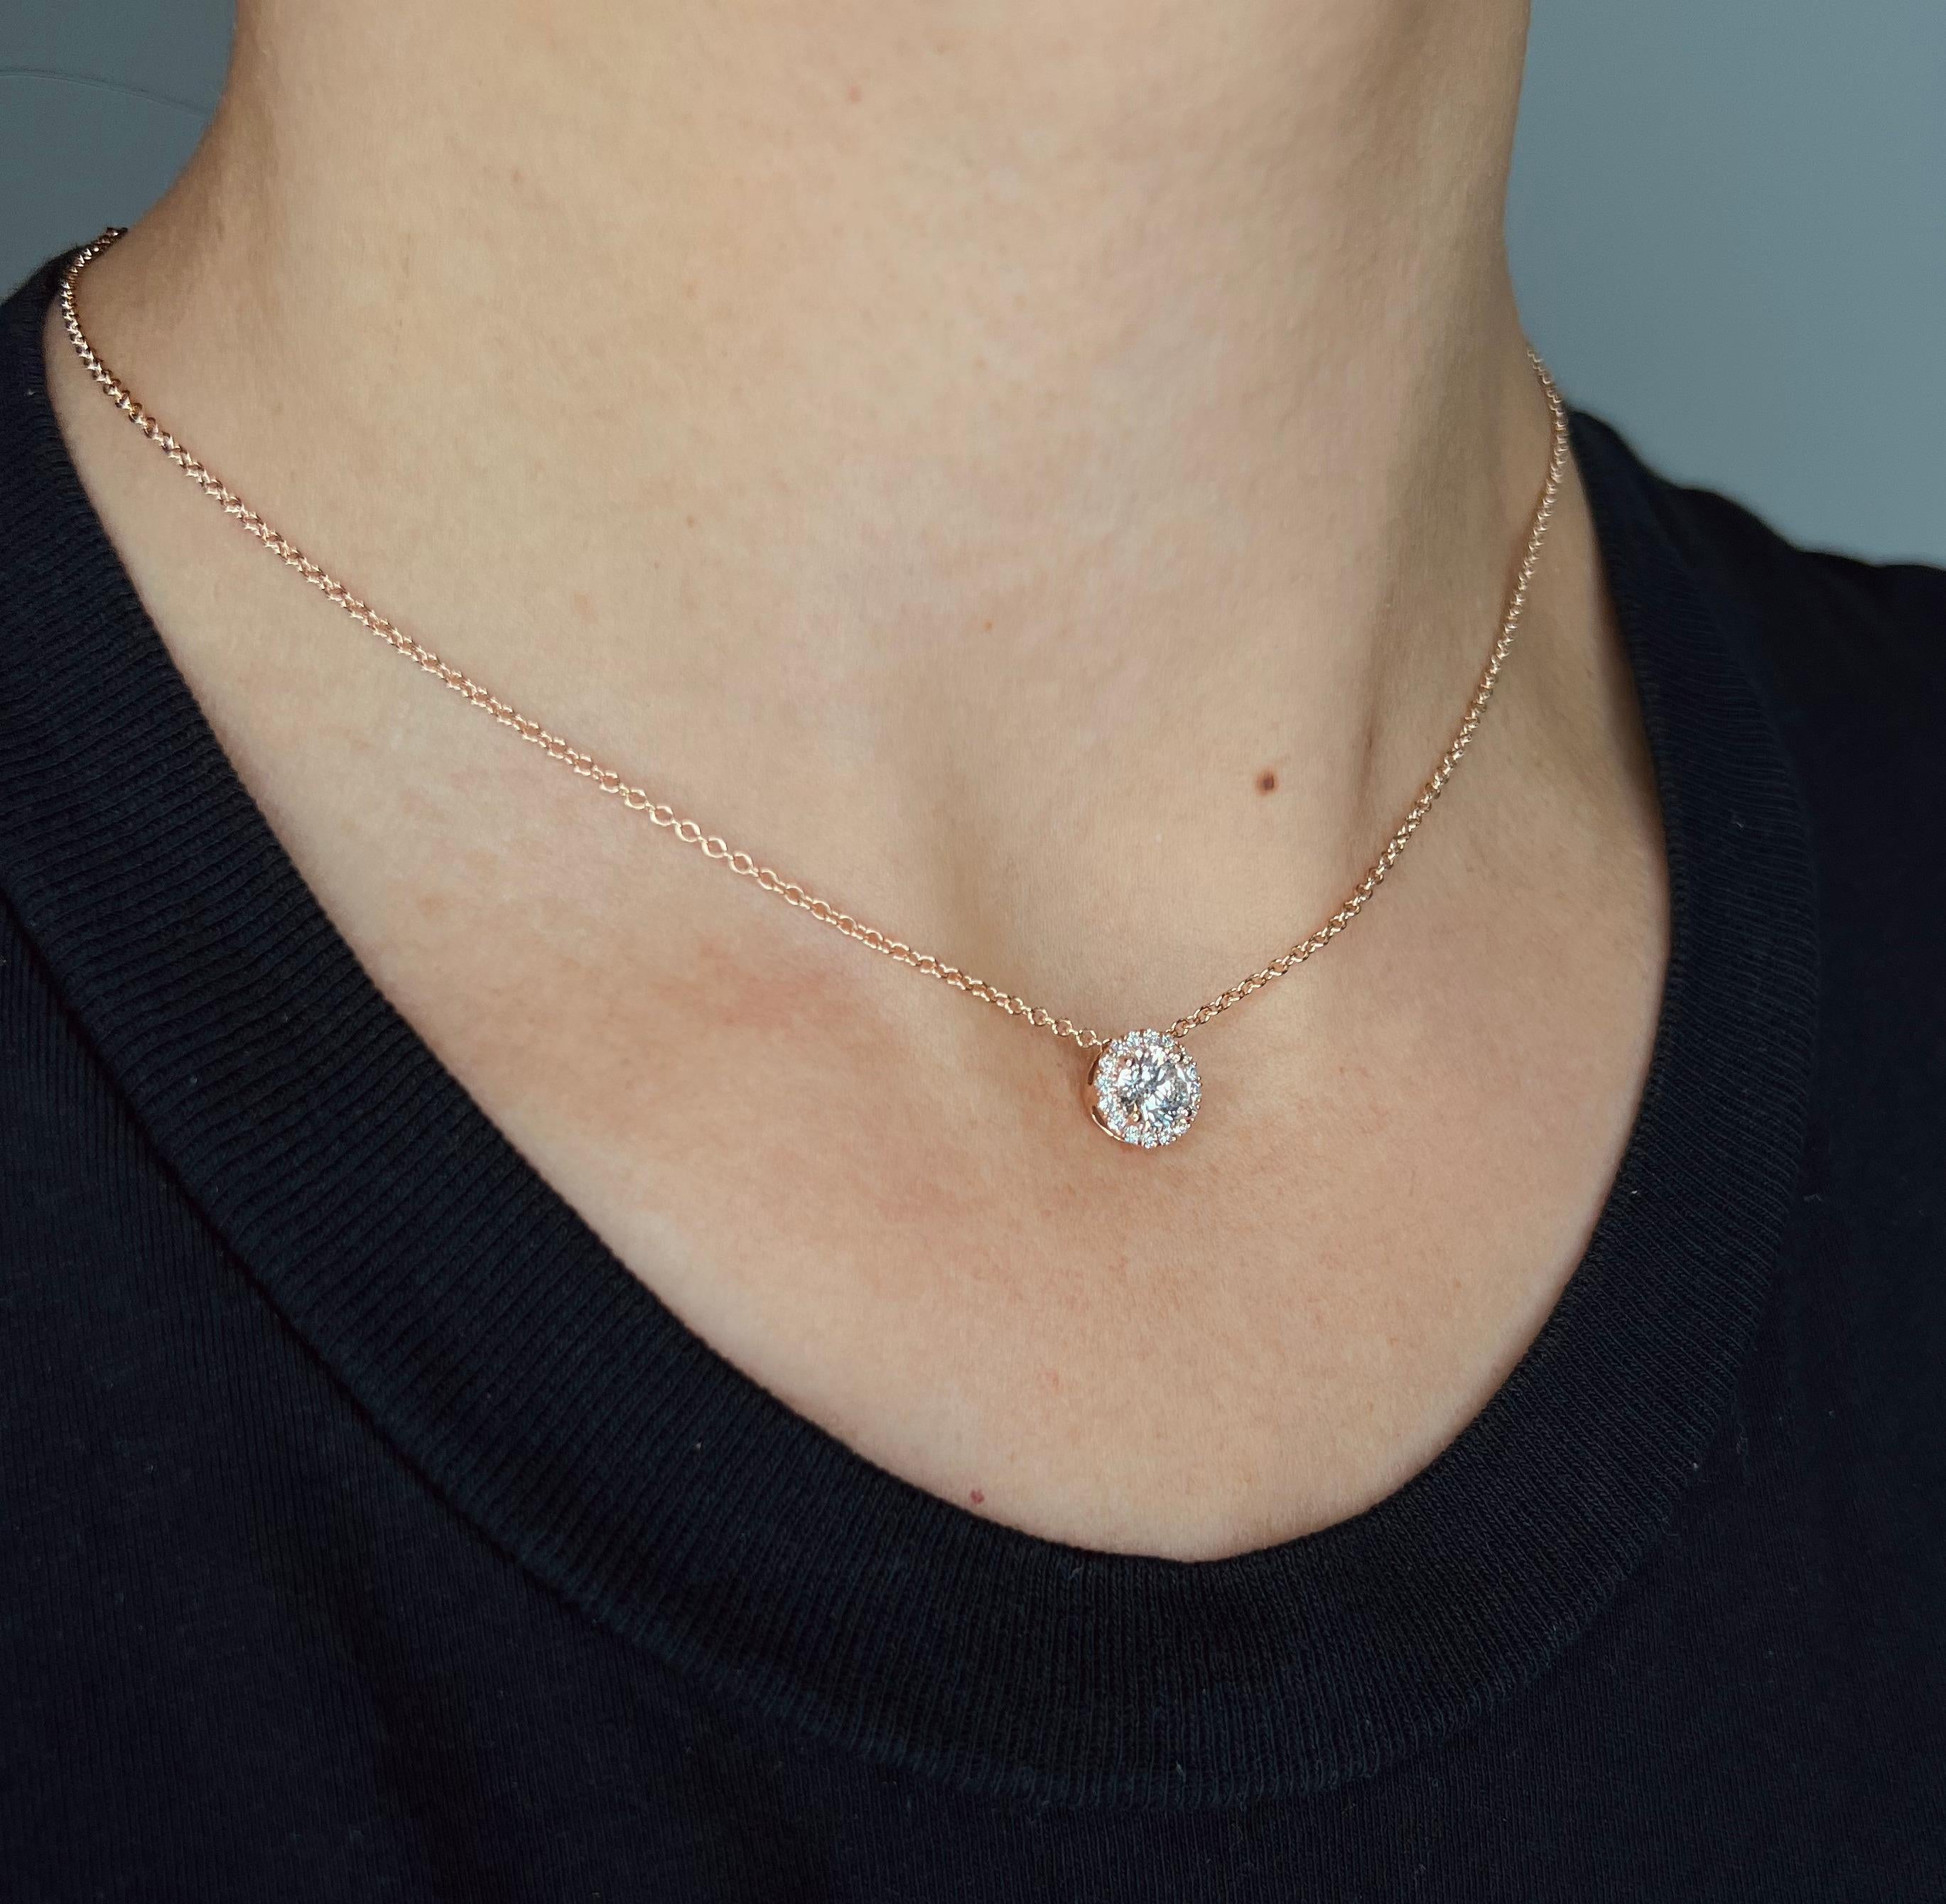 Women's or Men's 14k White Gold 0.90 Carat Round Cut Diamond Solitaire Pendant Necklace For Sale